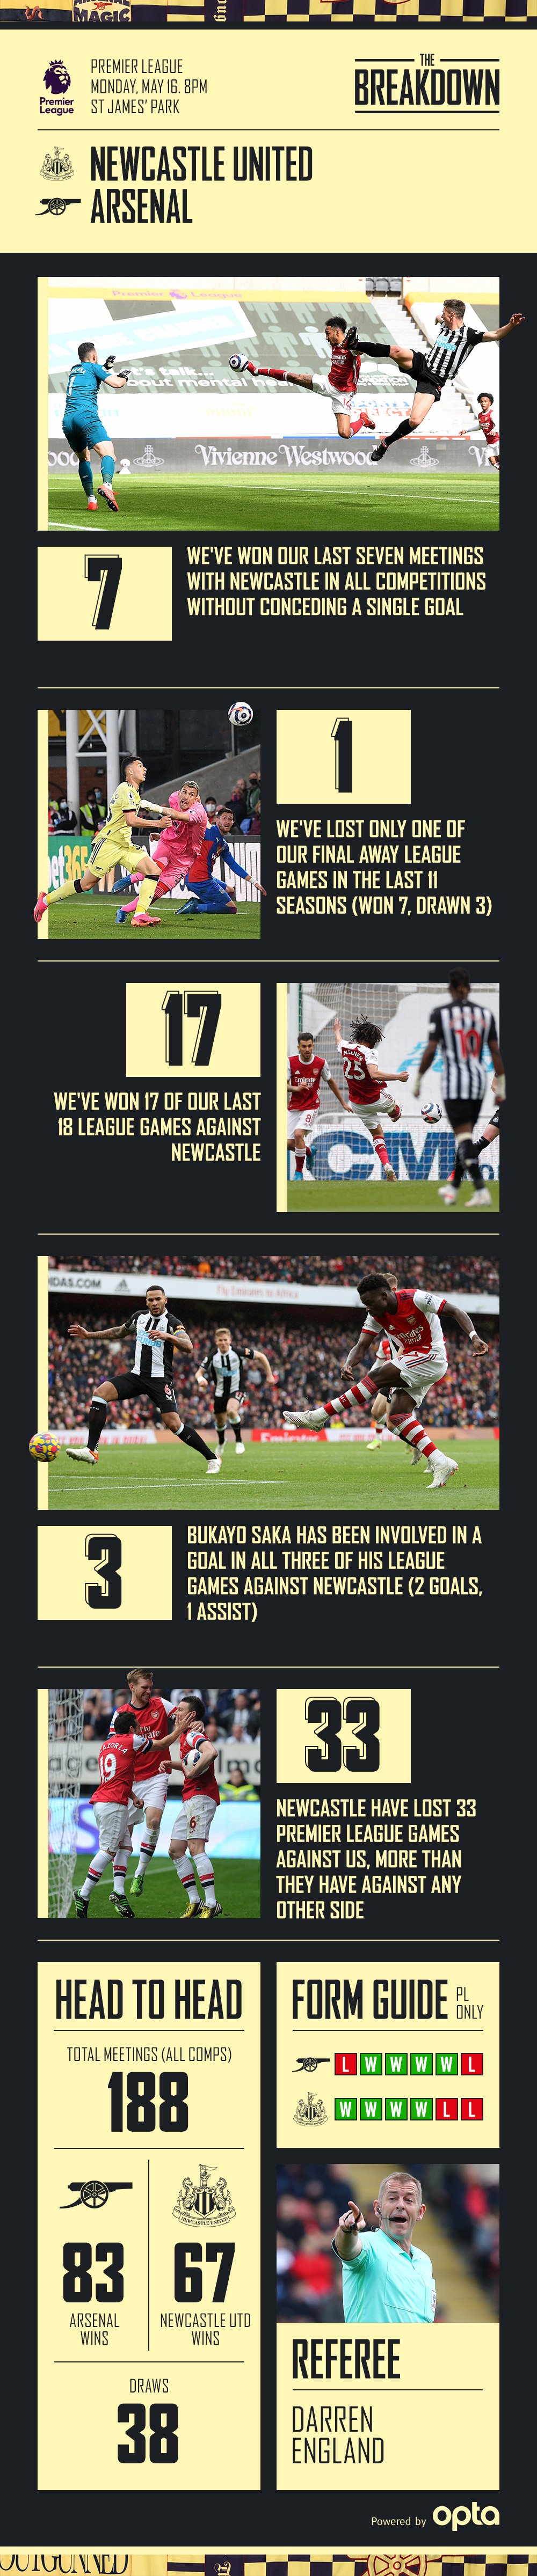 Newcastle United vs Arsenal Breakdown